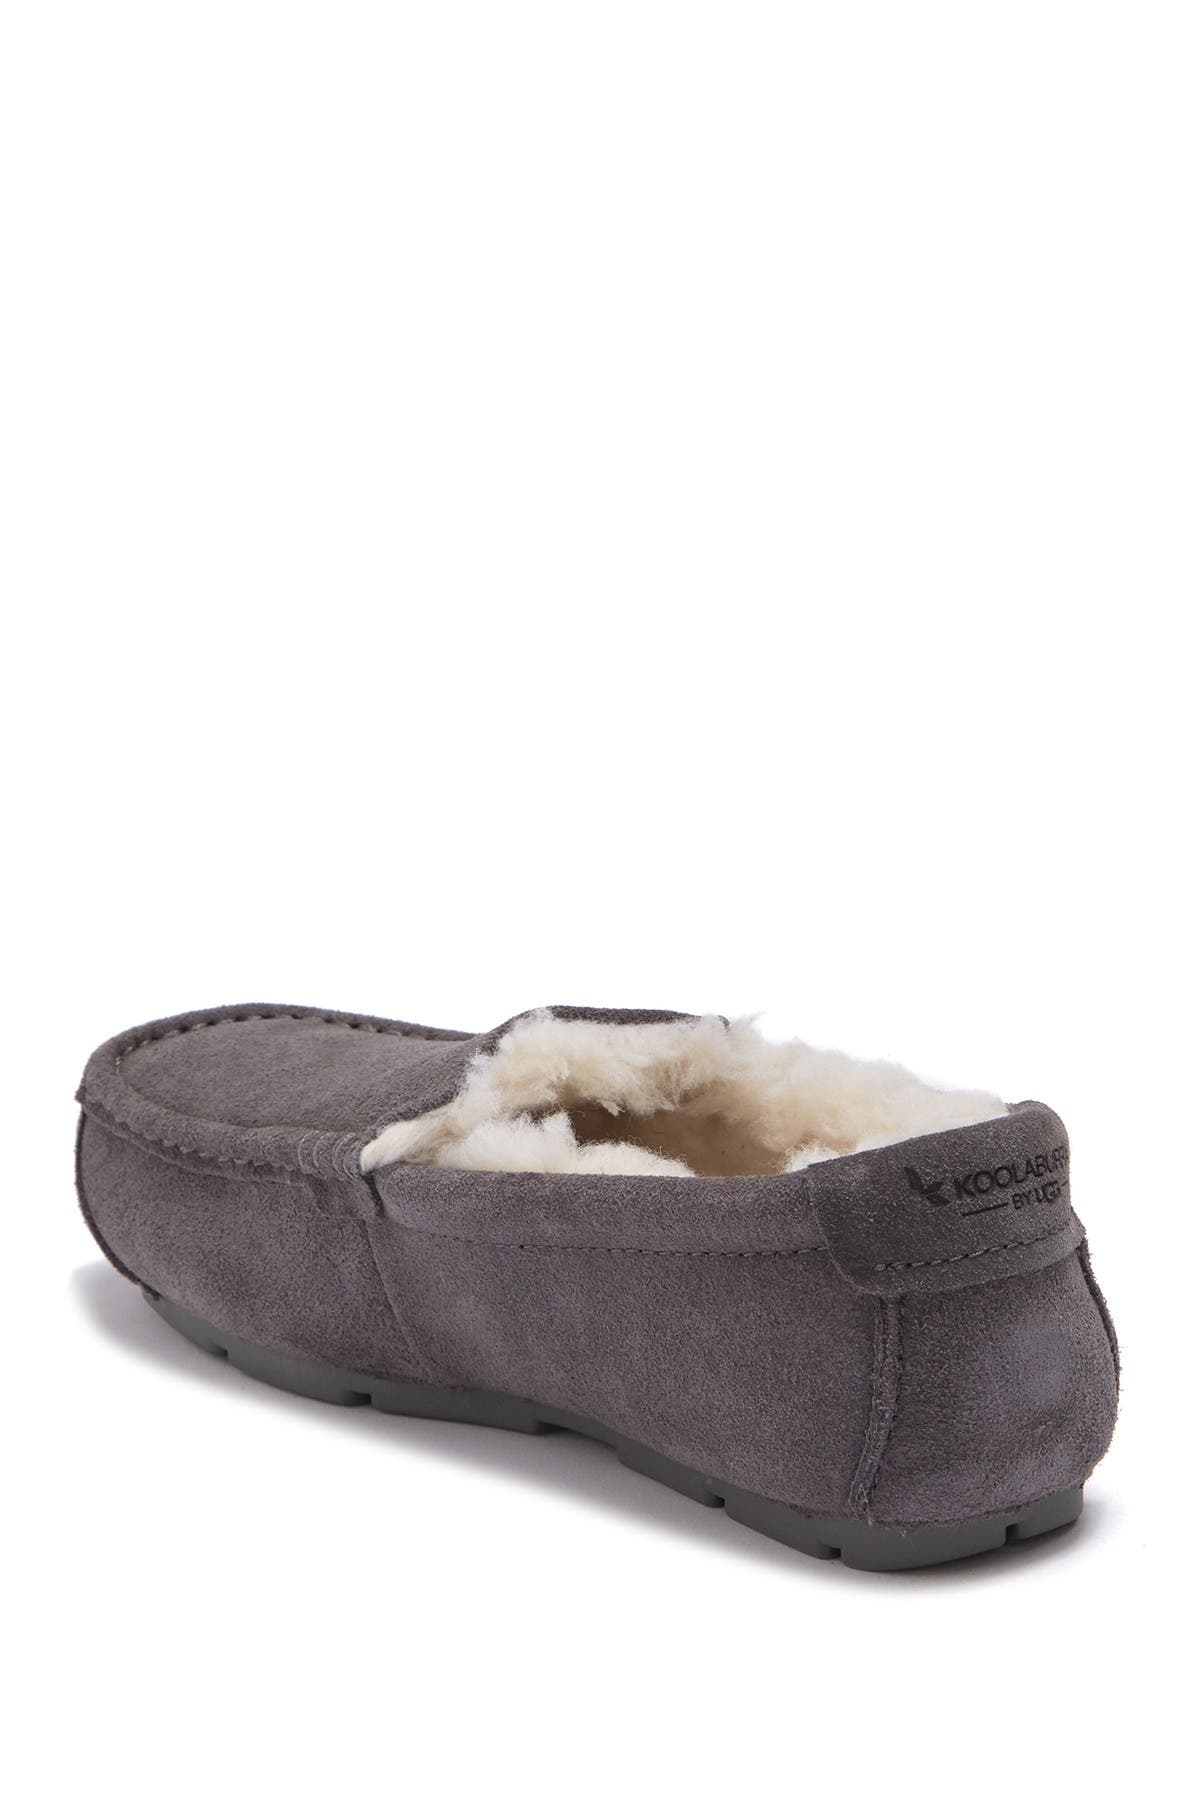 koolaburra by ugg mens slippers